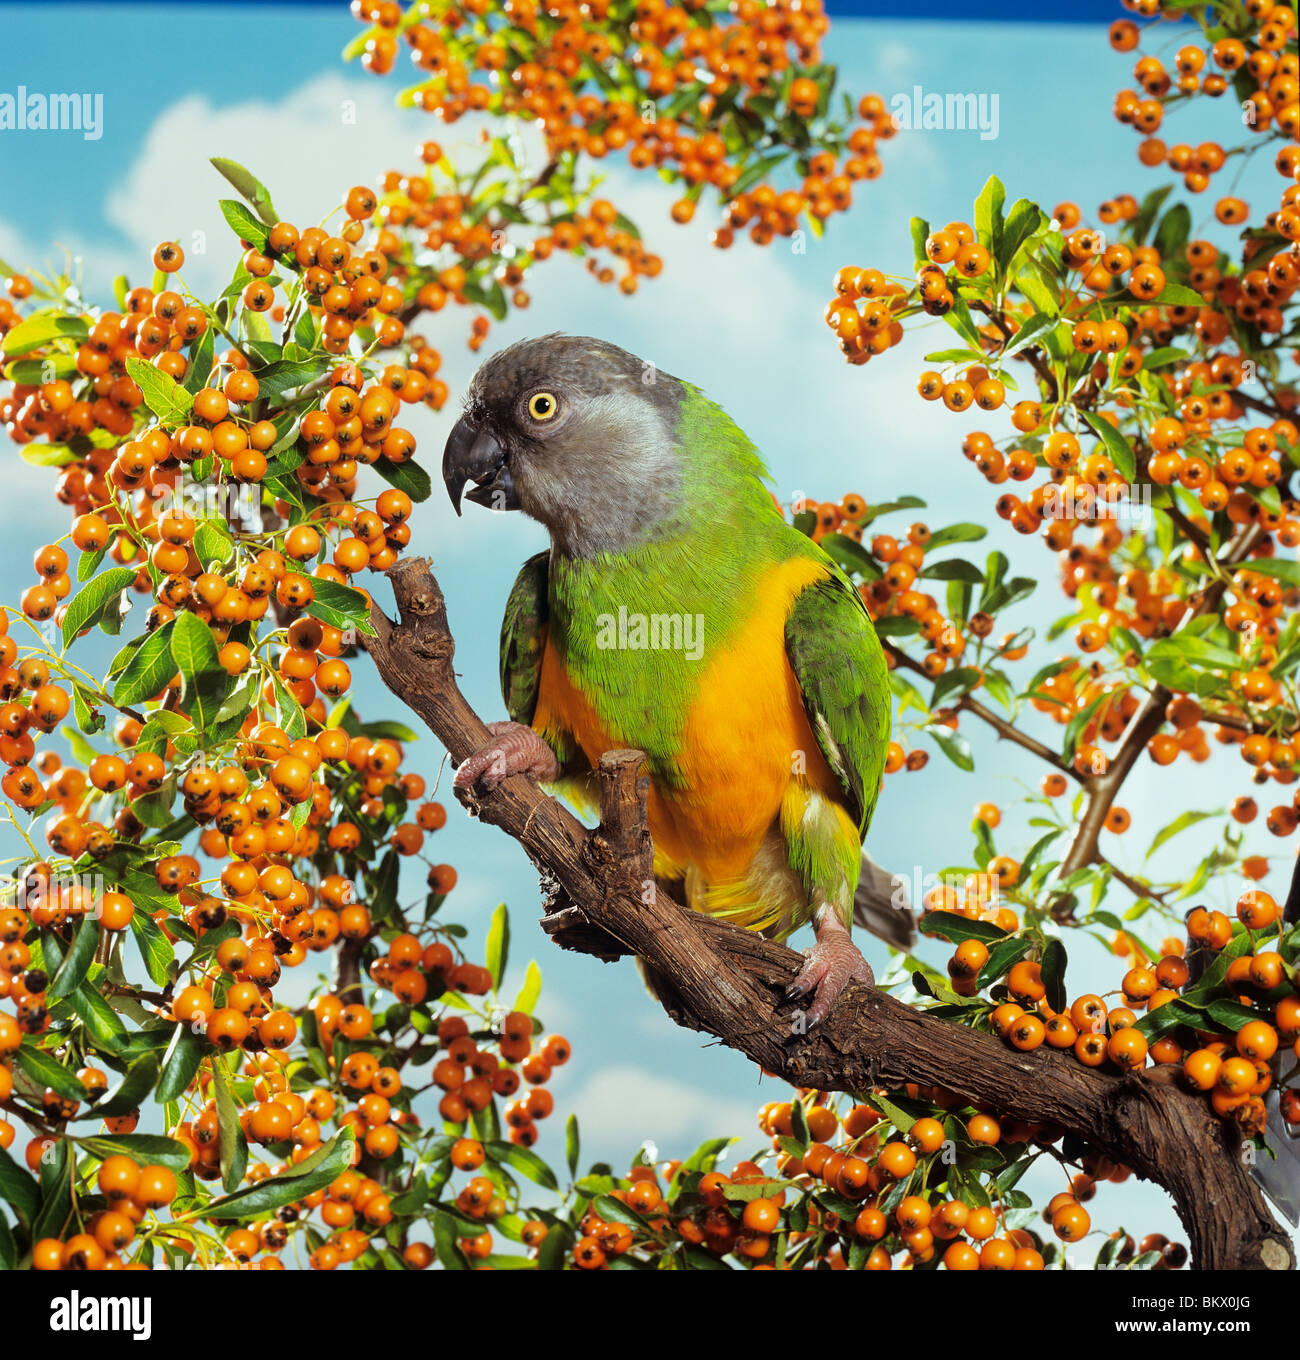 Senegal Parrot branch / Poicephalus senegalus Stock Photo